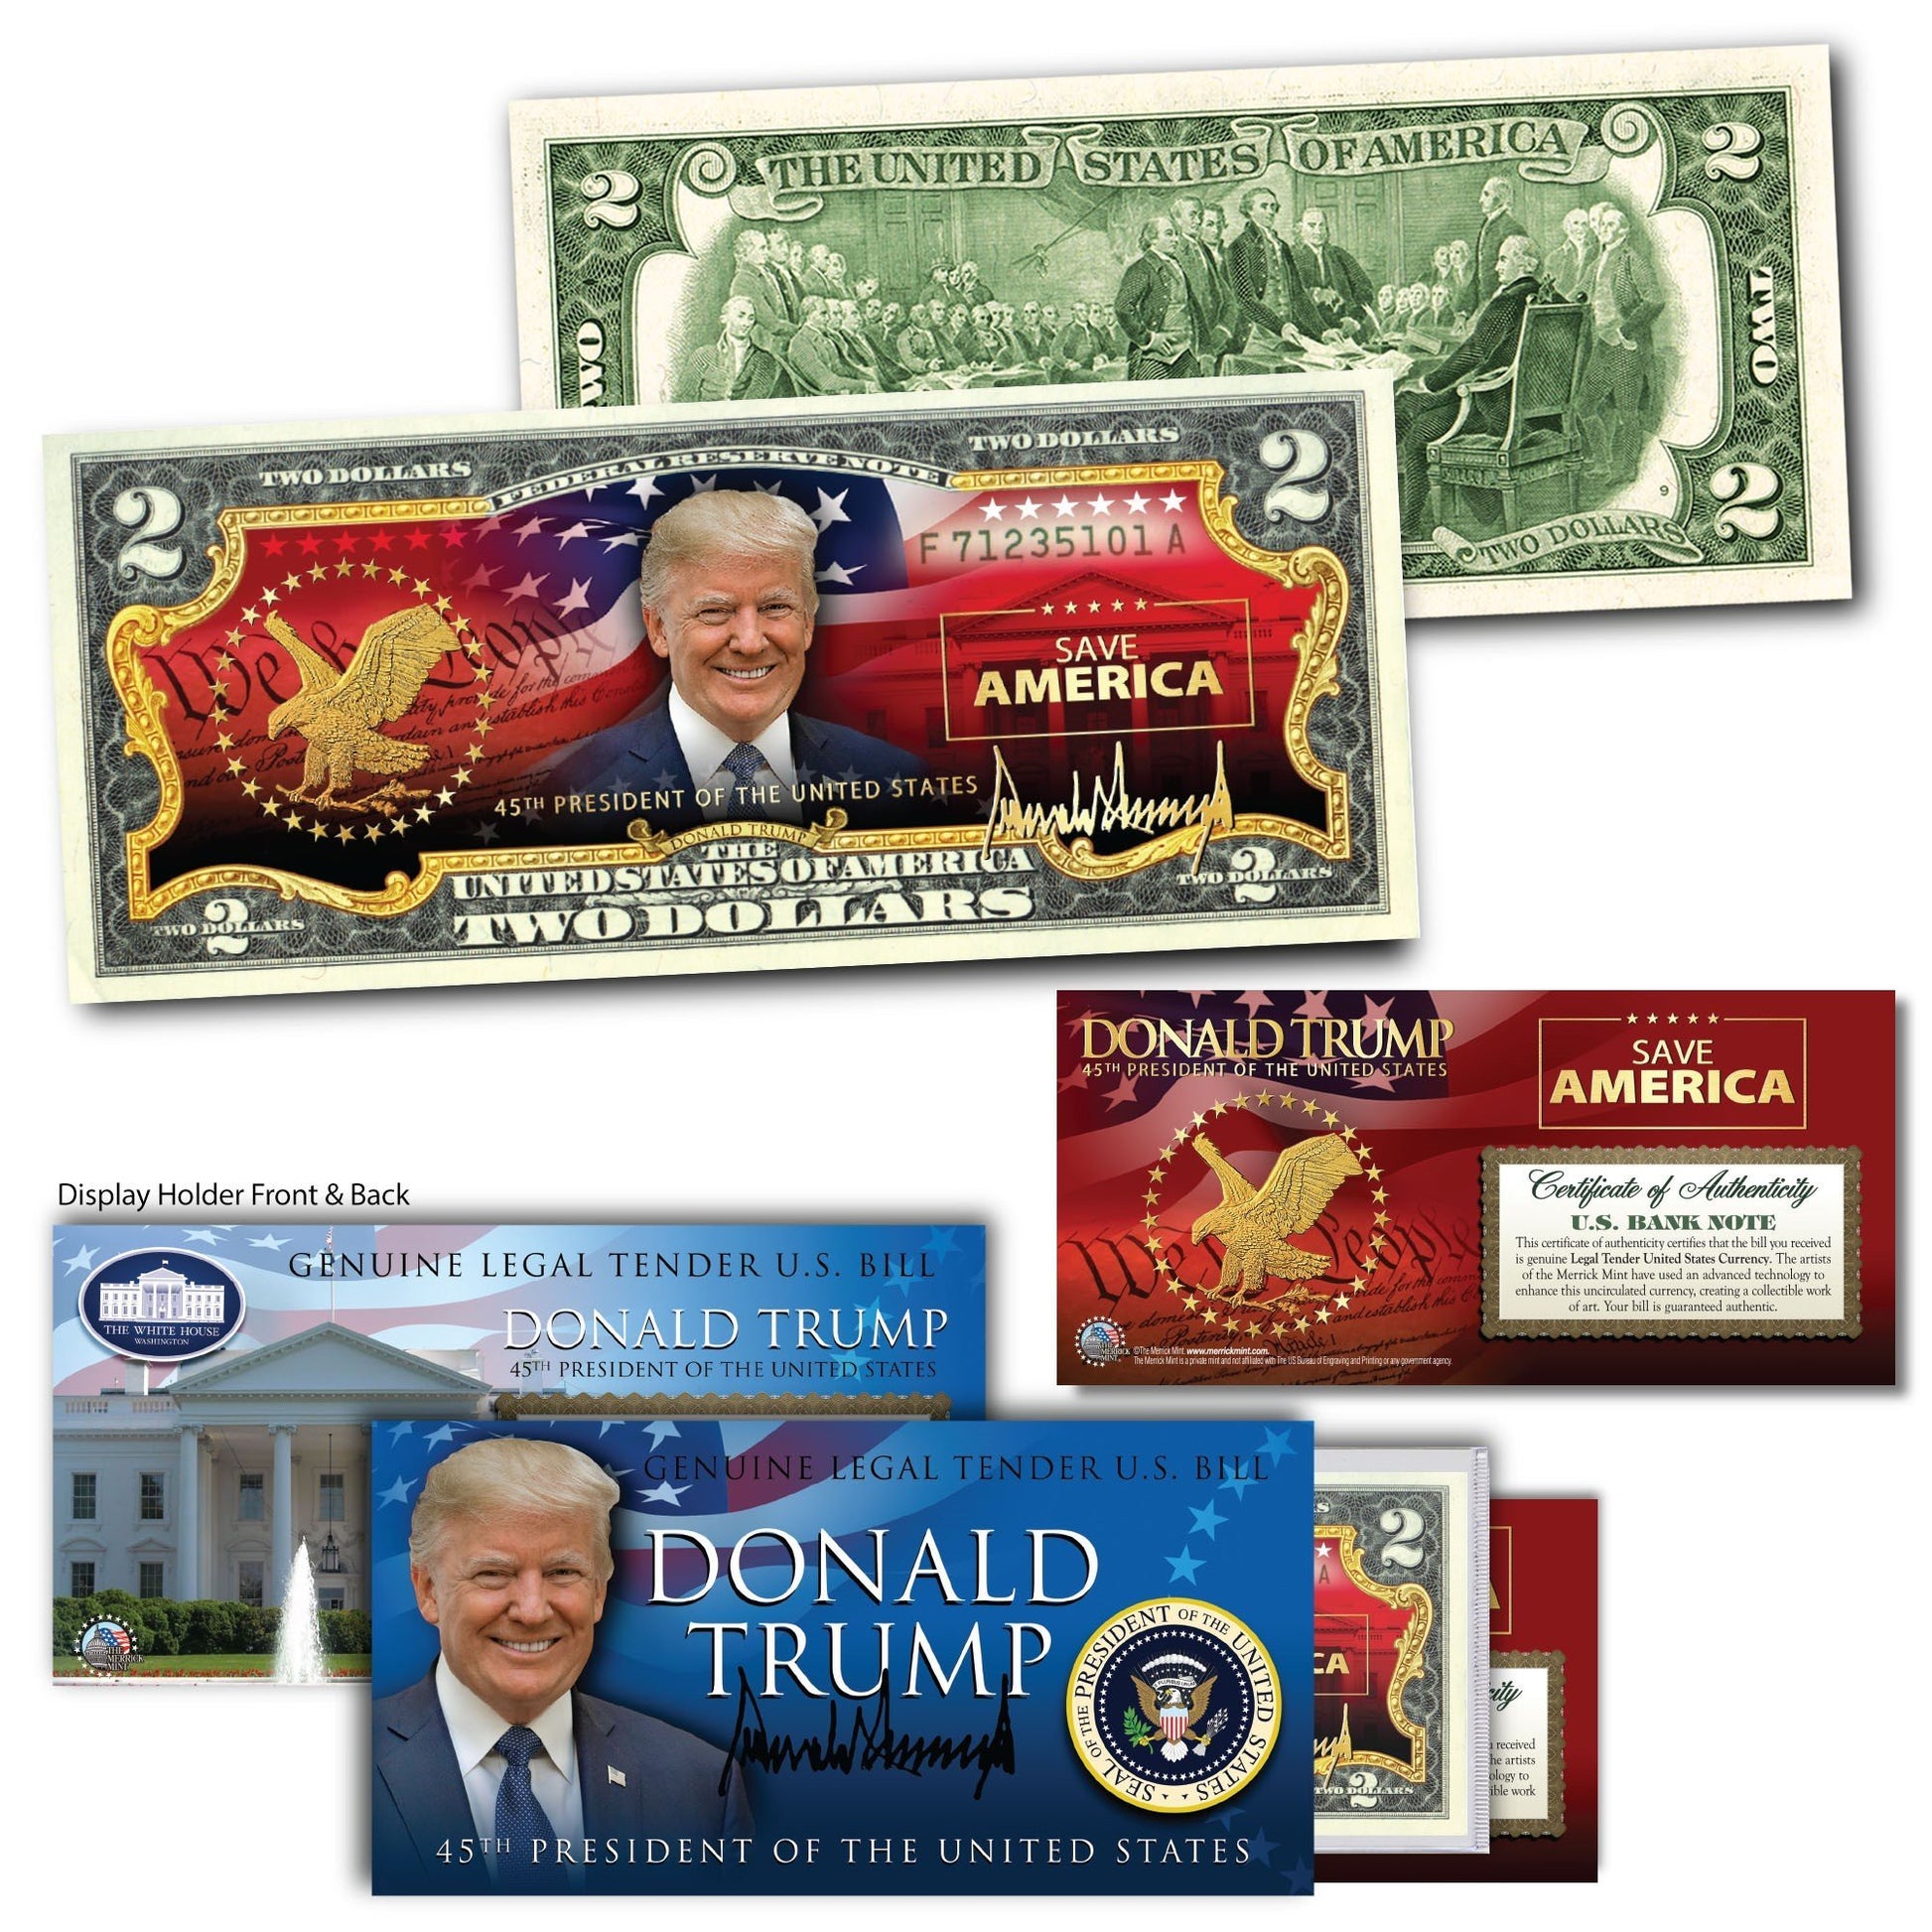 Donald Trump - "Save America" - Genuine Legal Tender U.S. $2 Bill - Proud Patriots